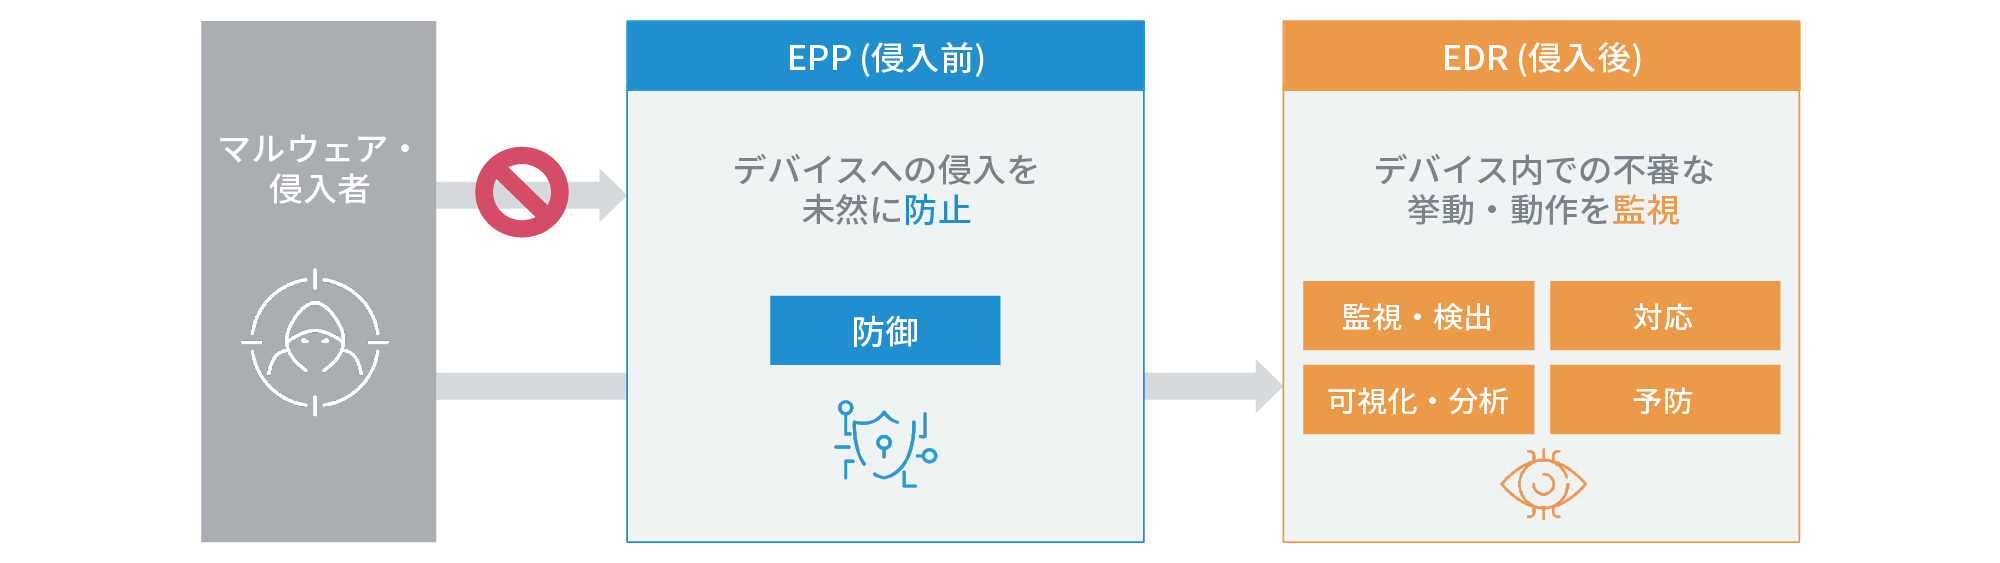 EPPとEDRの概念イメージ